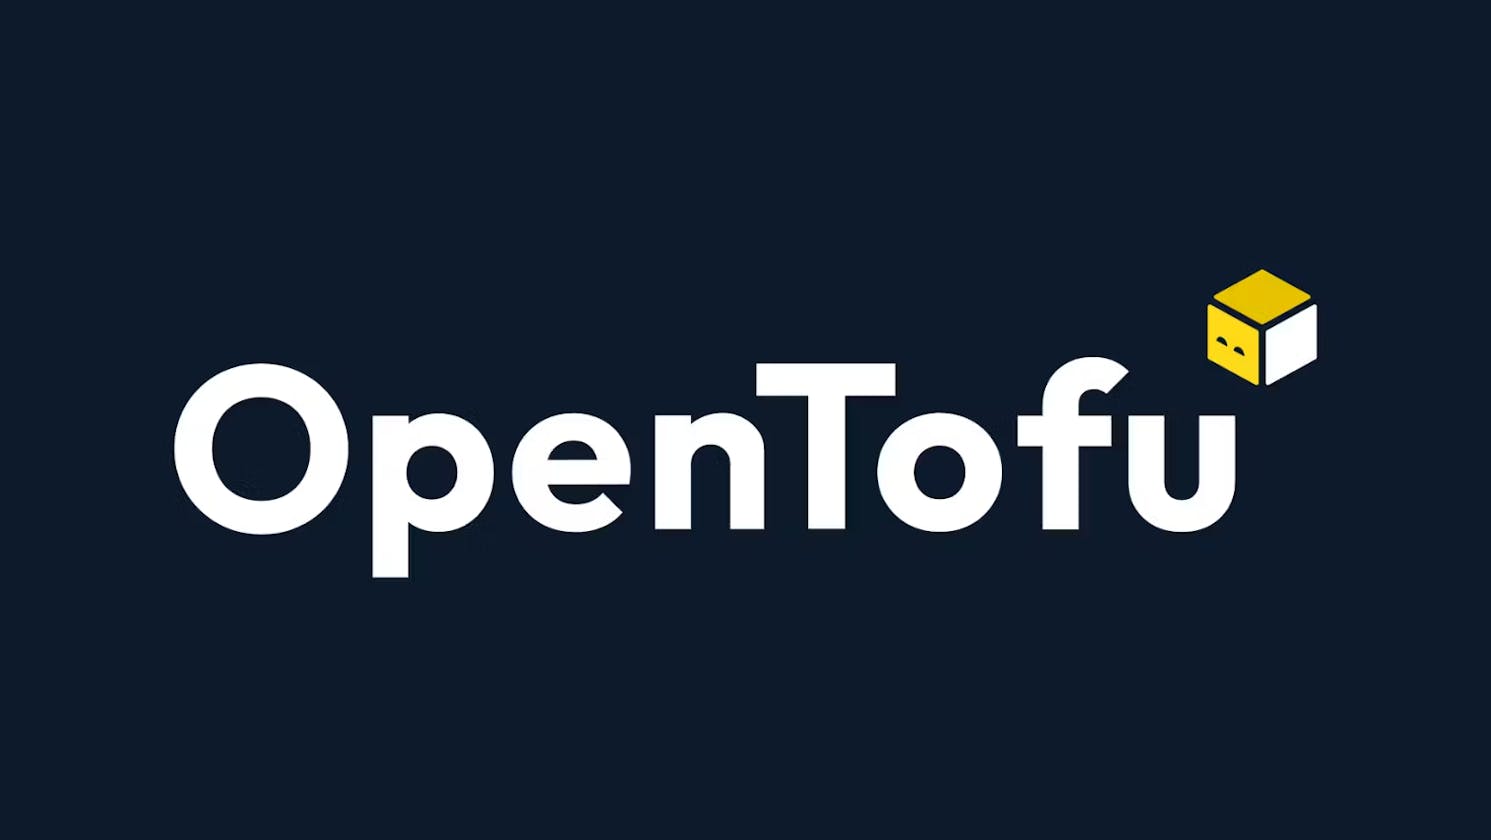 Upgraded my website infrastructure to OpenTofu